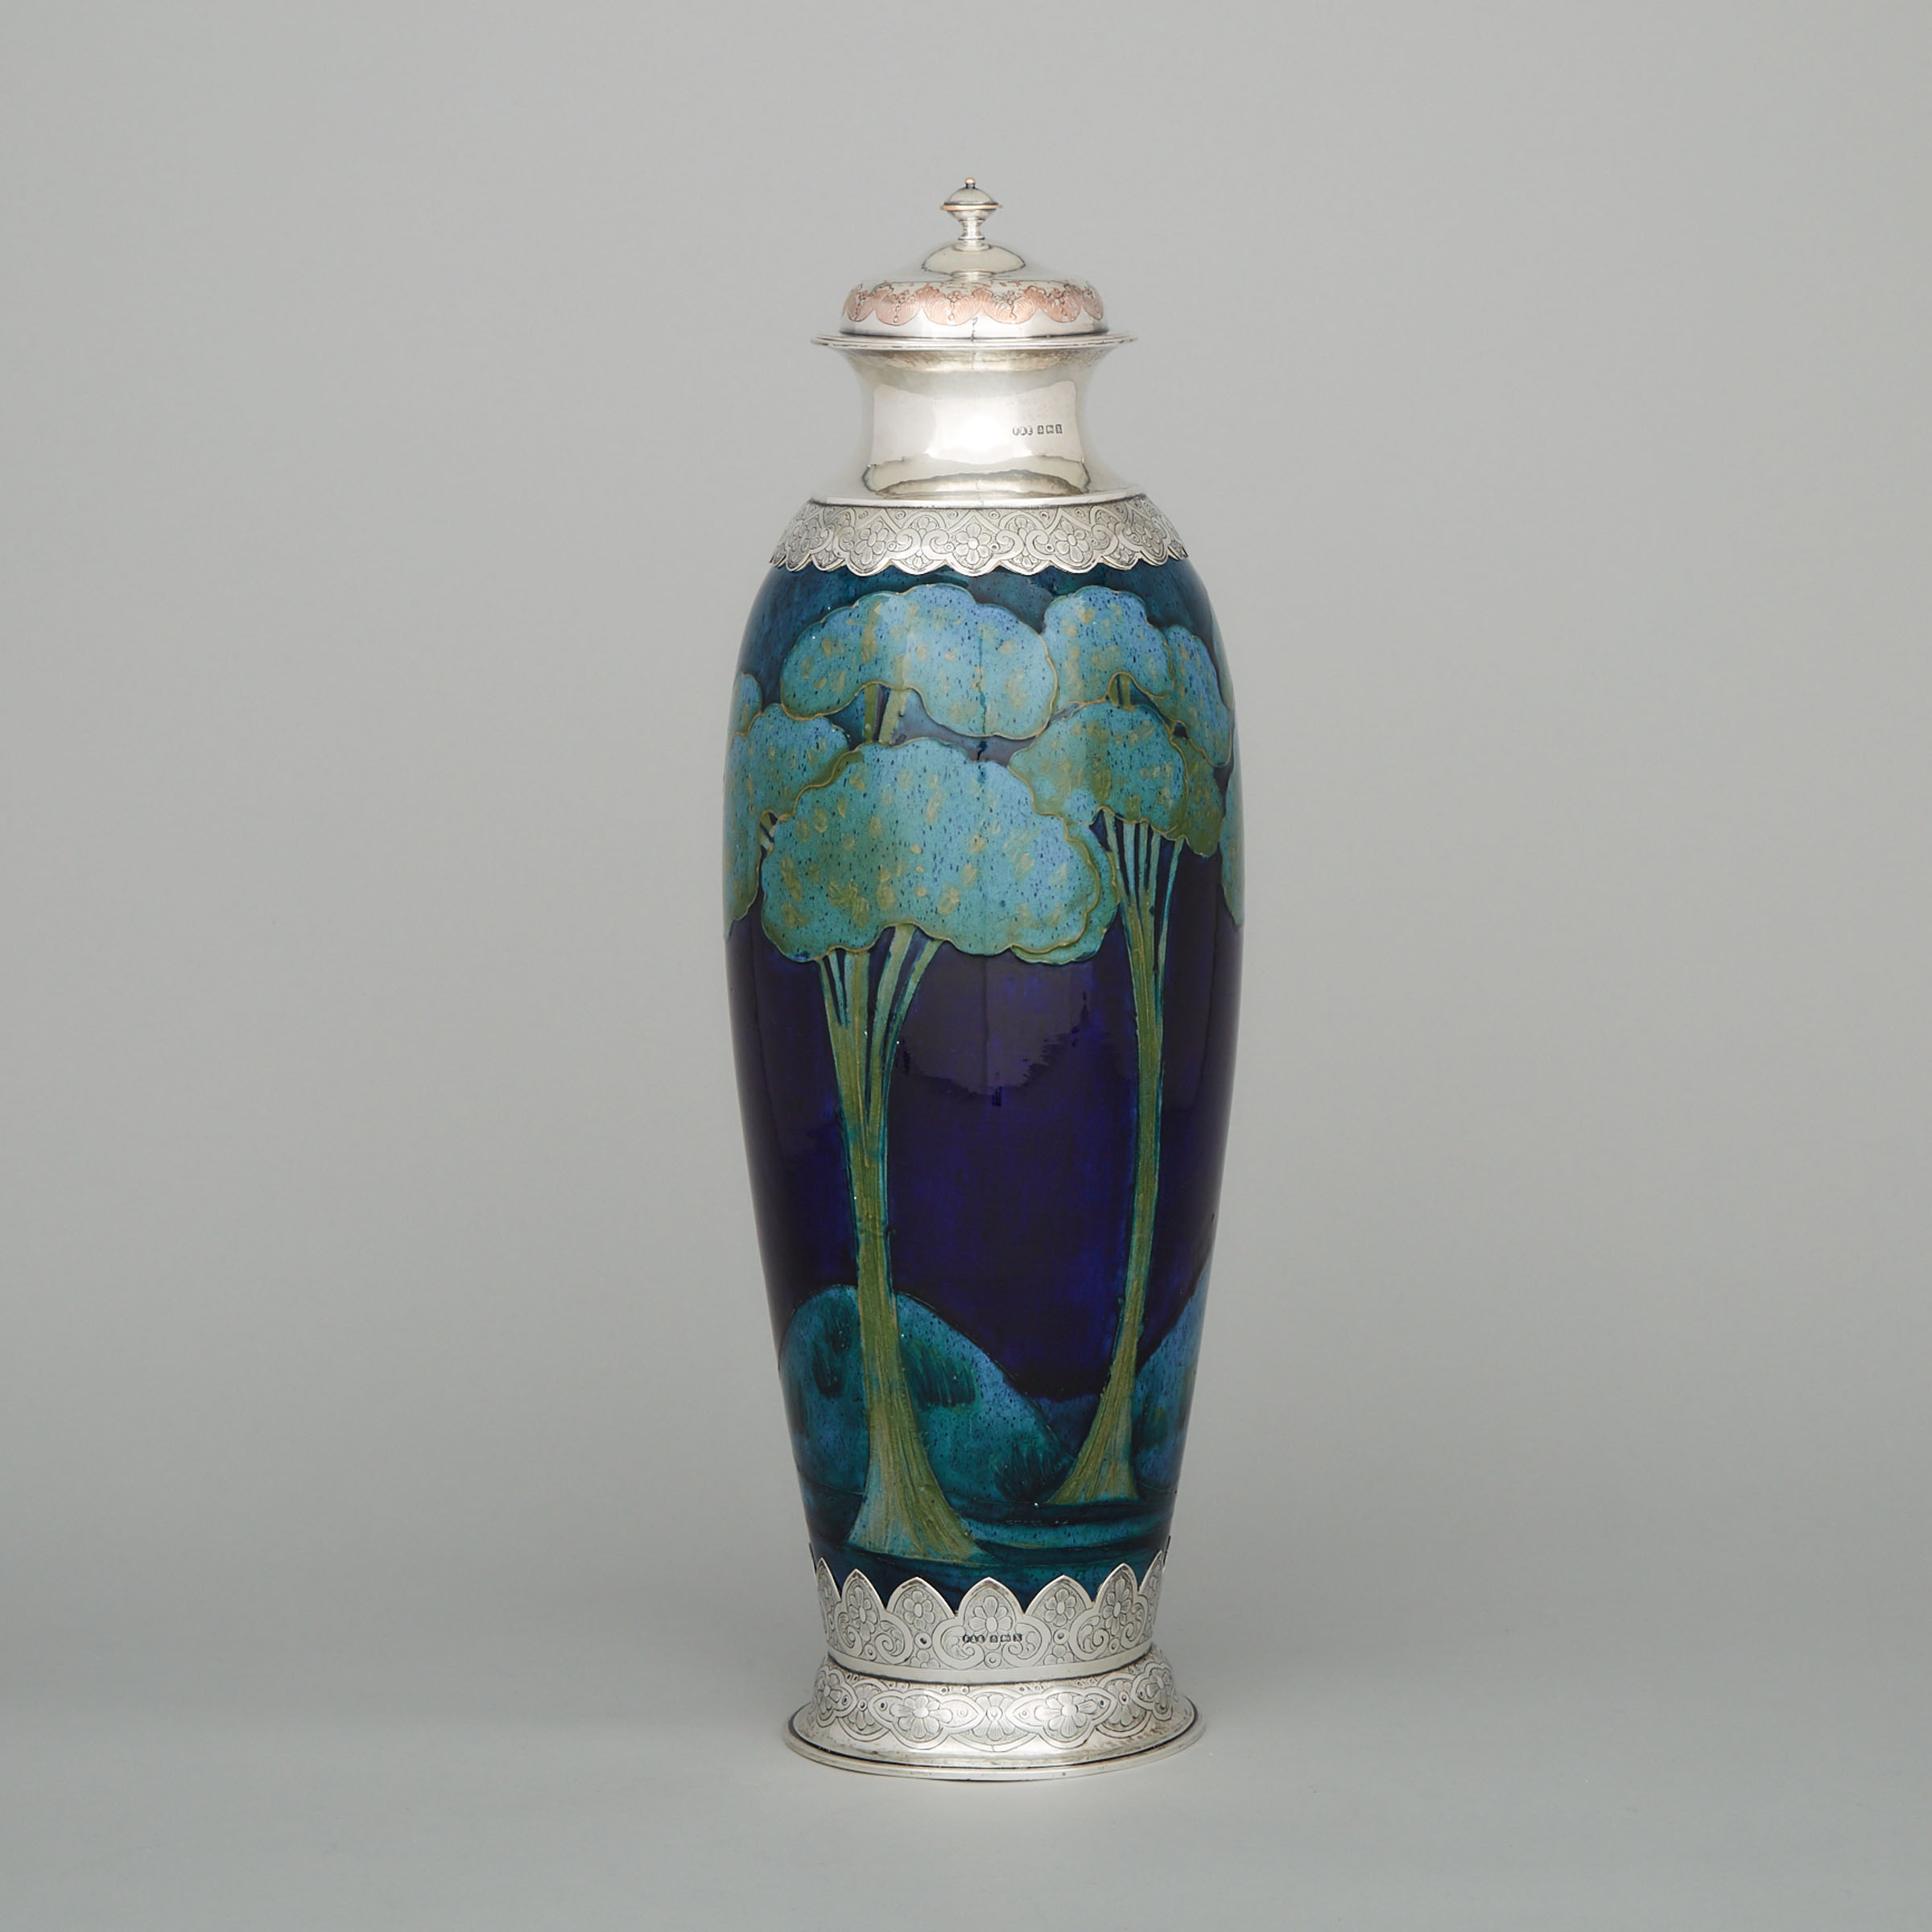 Engraved Silver Mounted Moorcroft Moonlit Blue Large Covered Vase, Francis Arthur Edwards, Birmingham, 1922